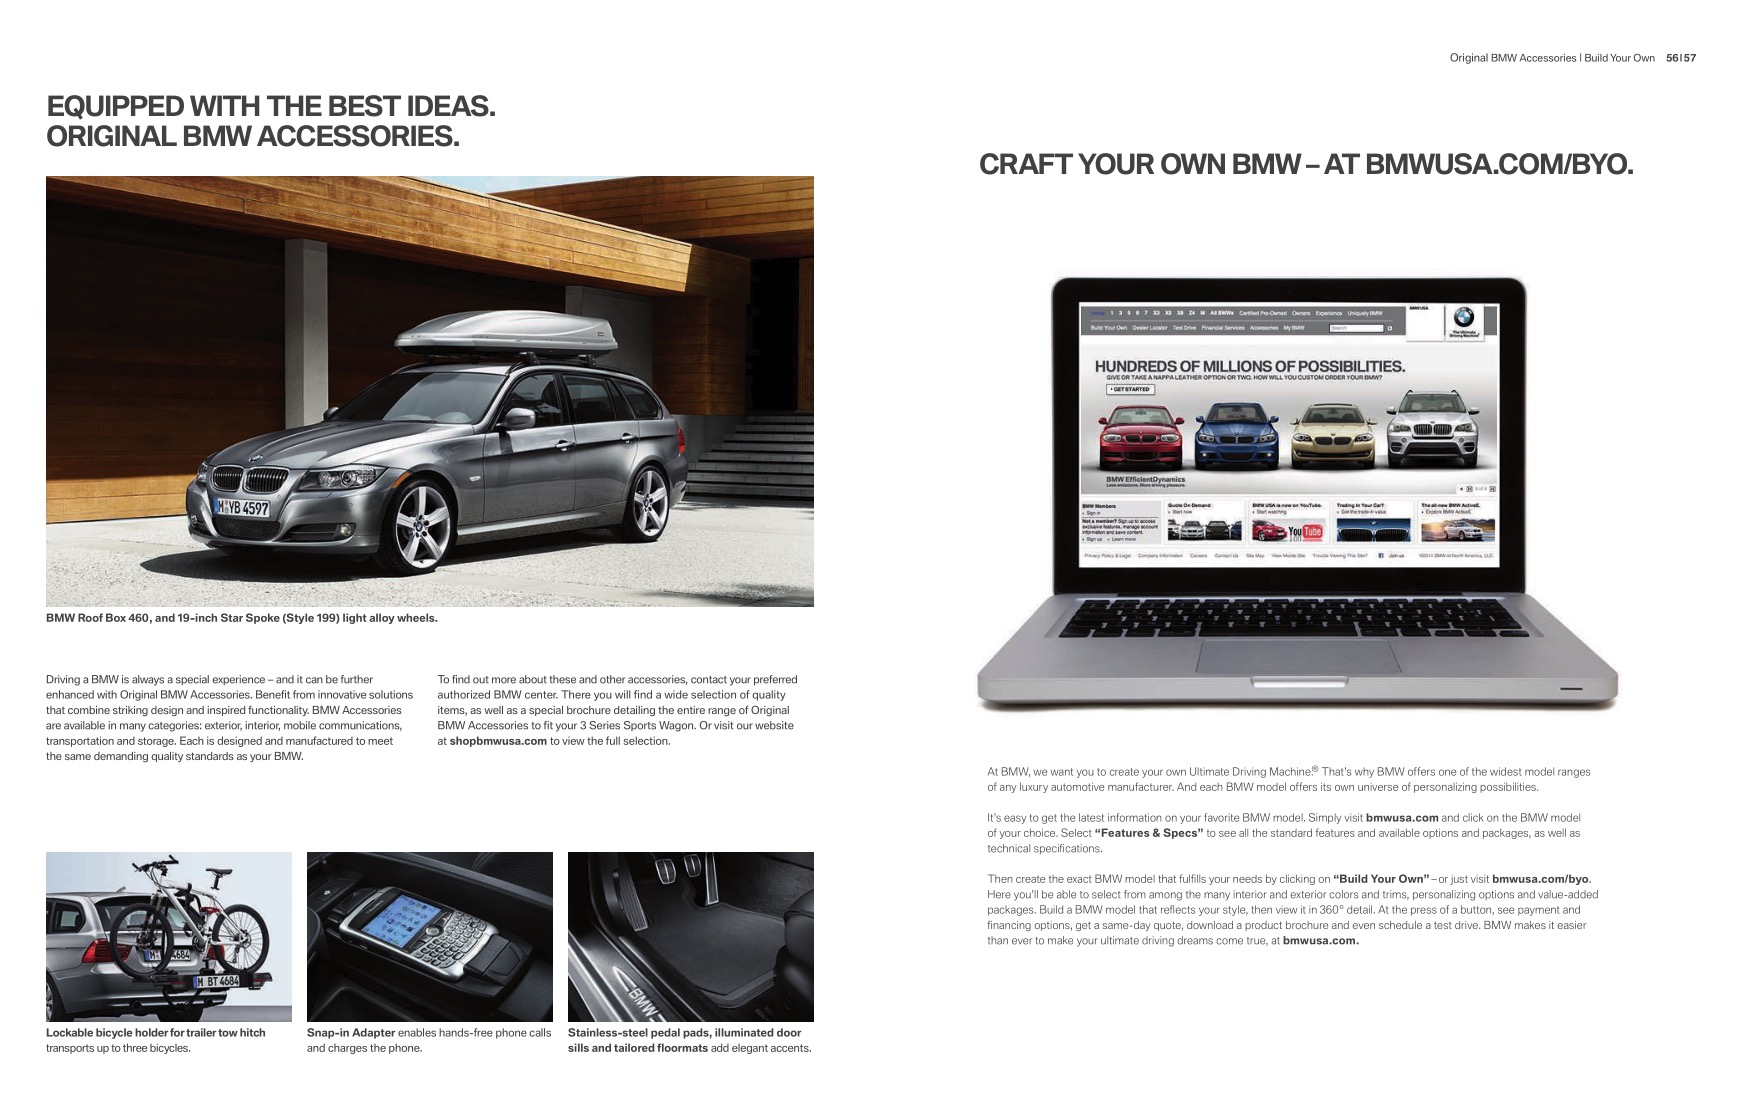 2012 BMW 3-Series Wagon Brochure Page 8